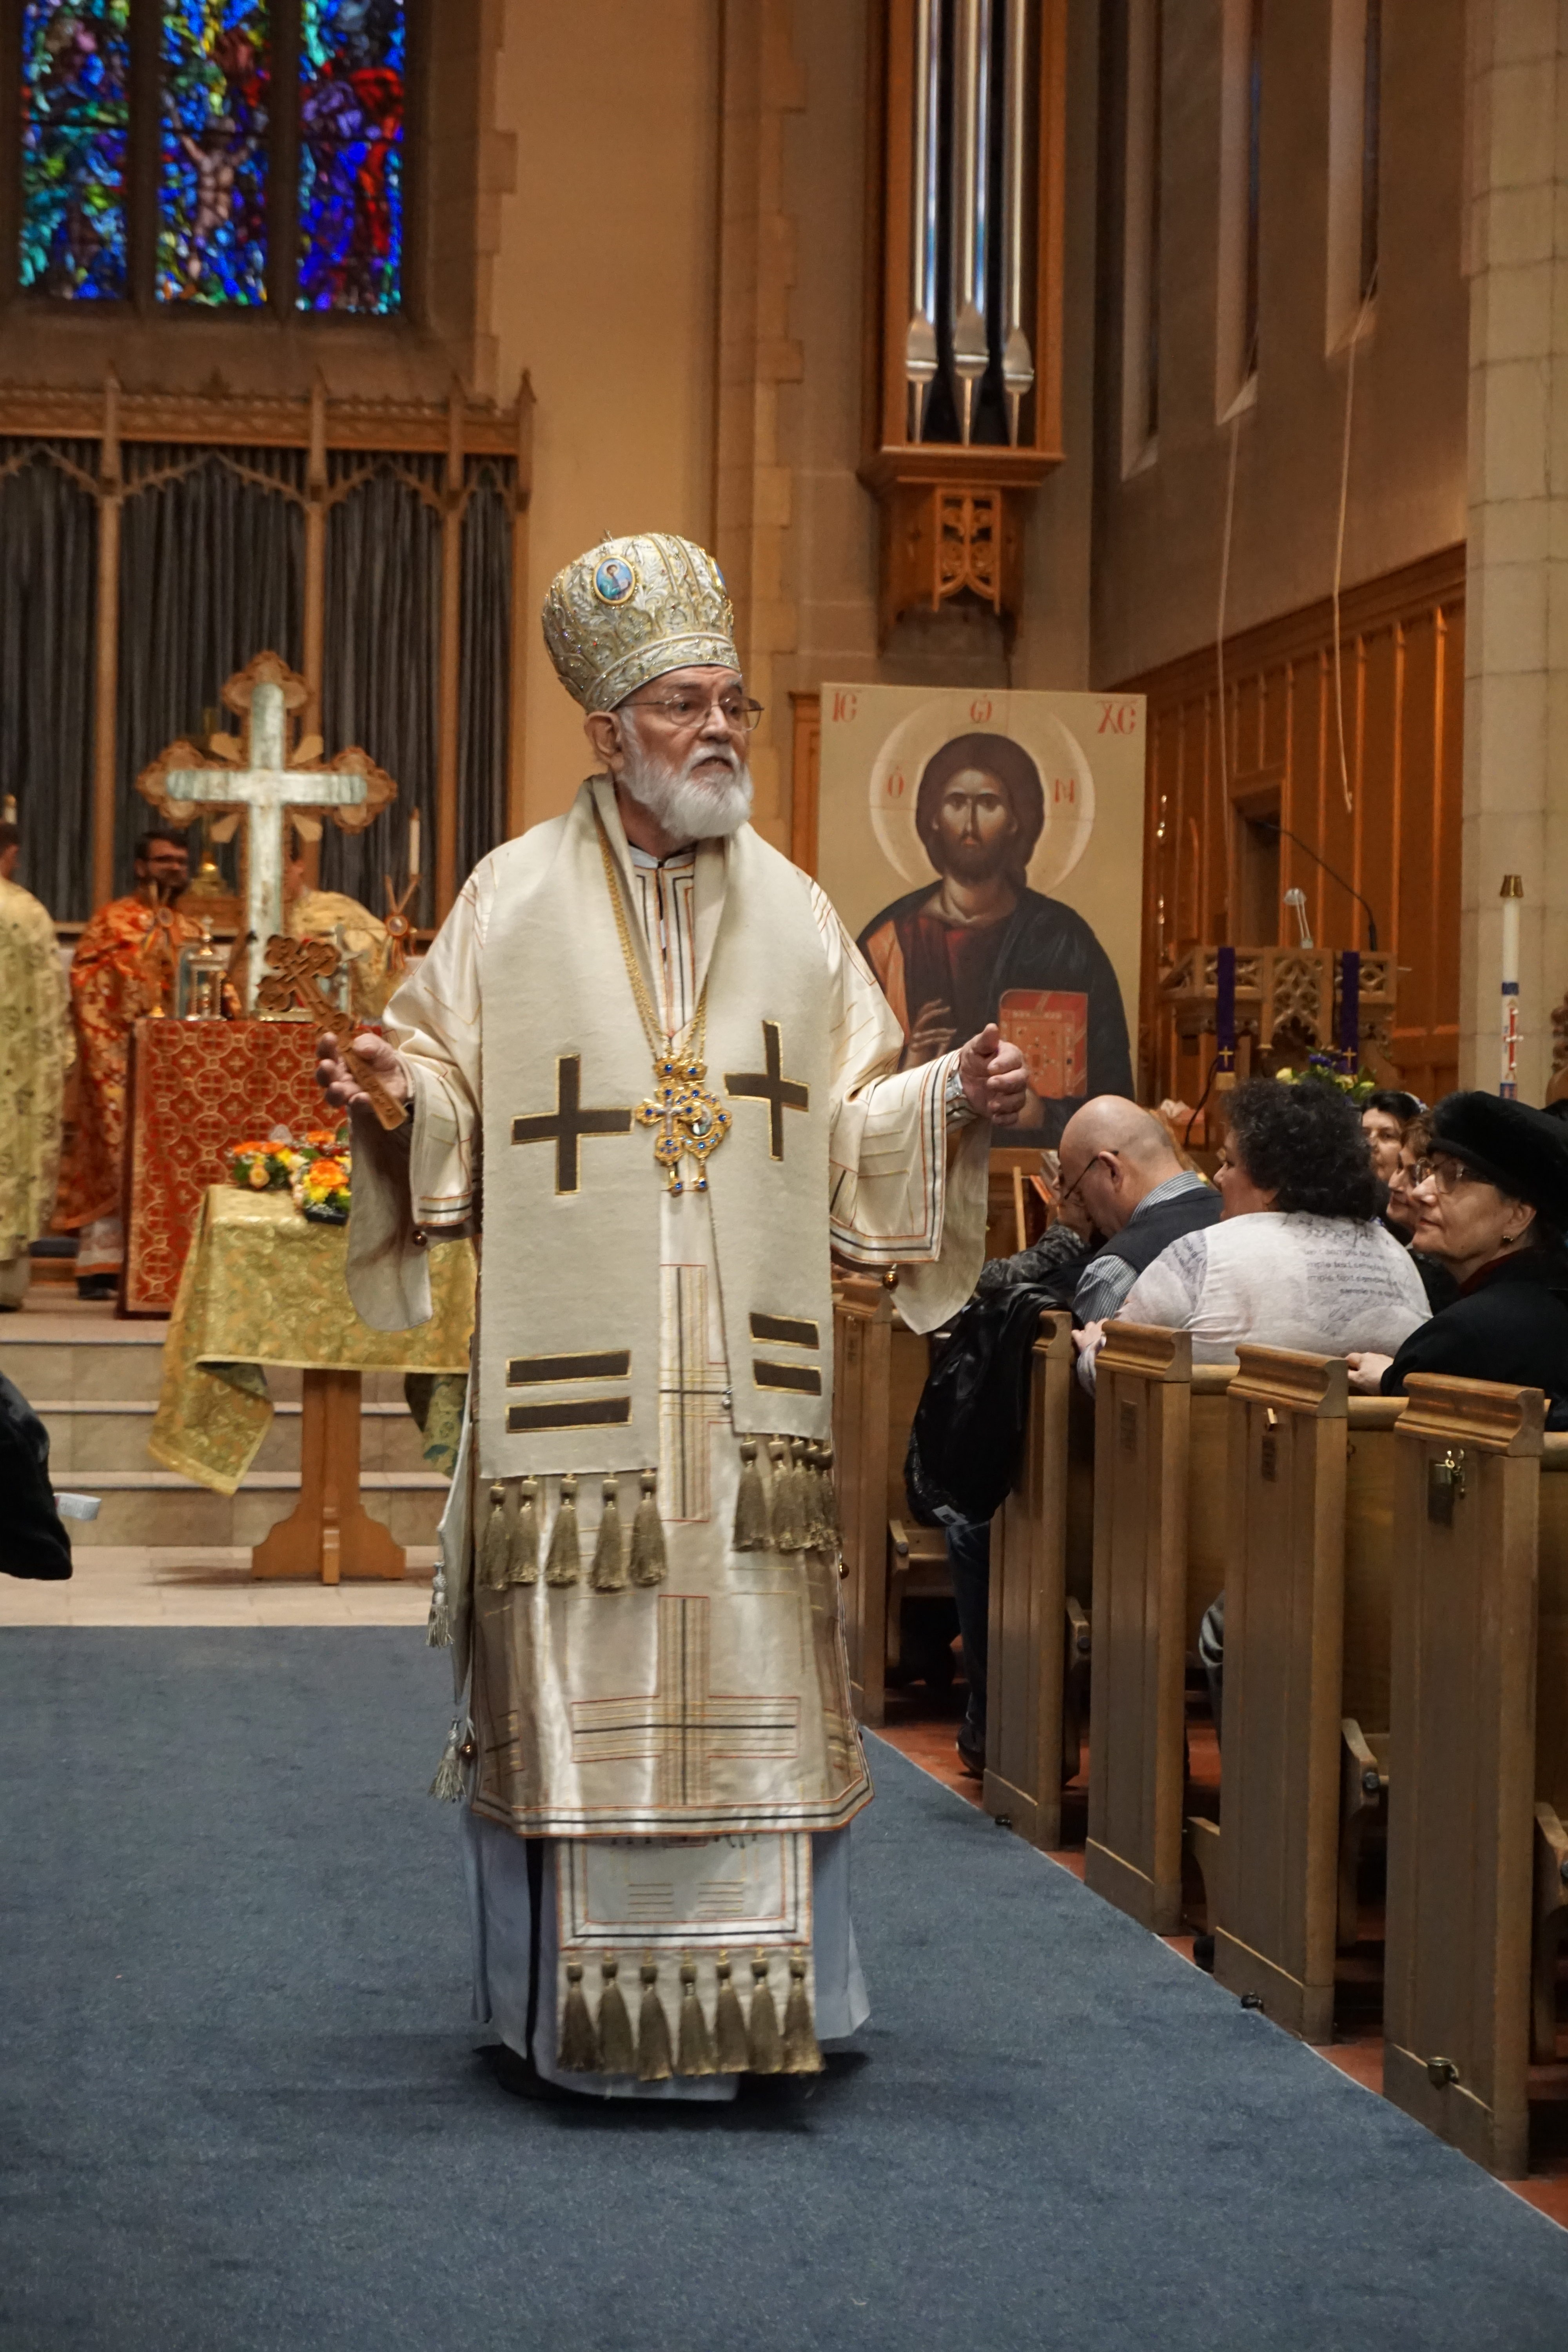 Vizita Arhiepiscopului nostru Nathaniel - 11 Martie 2018 (partea II)